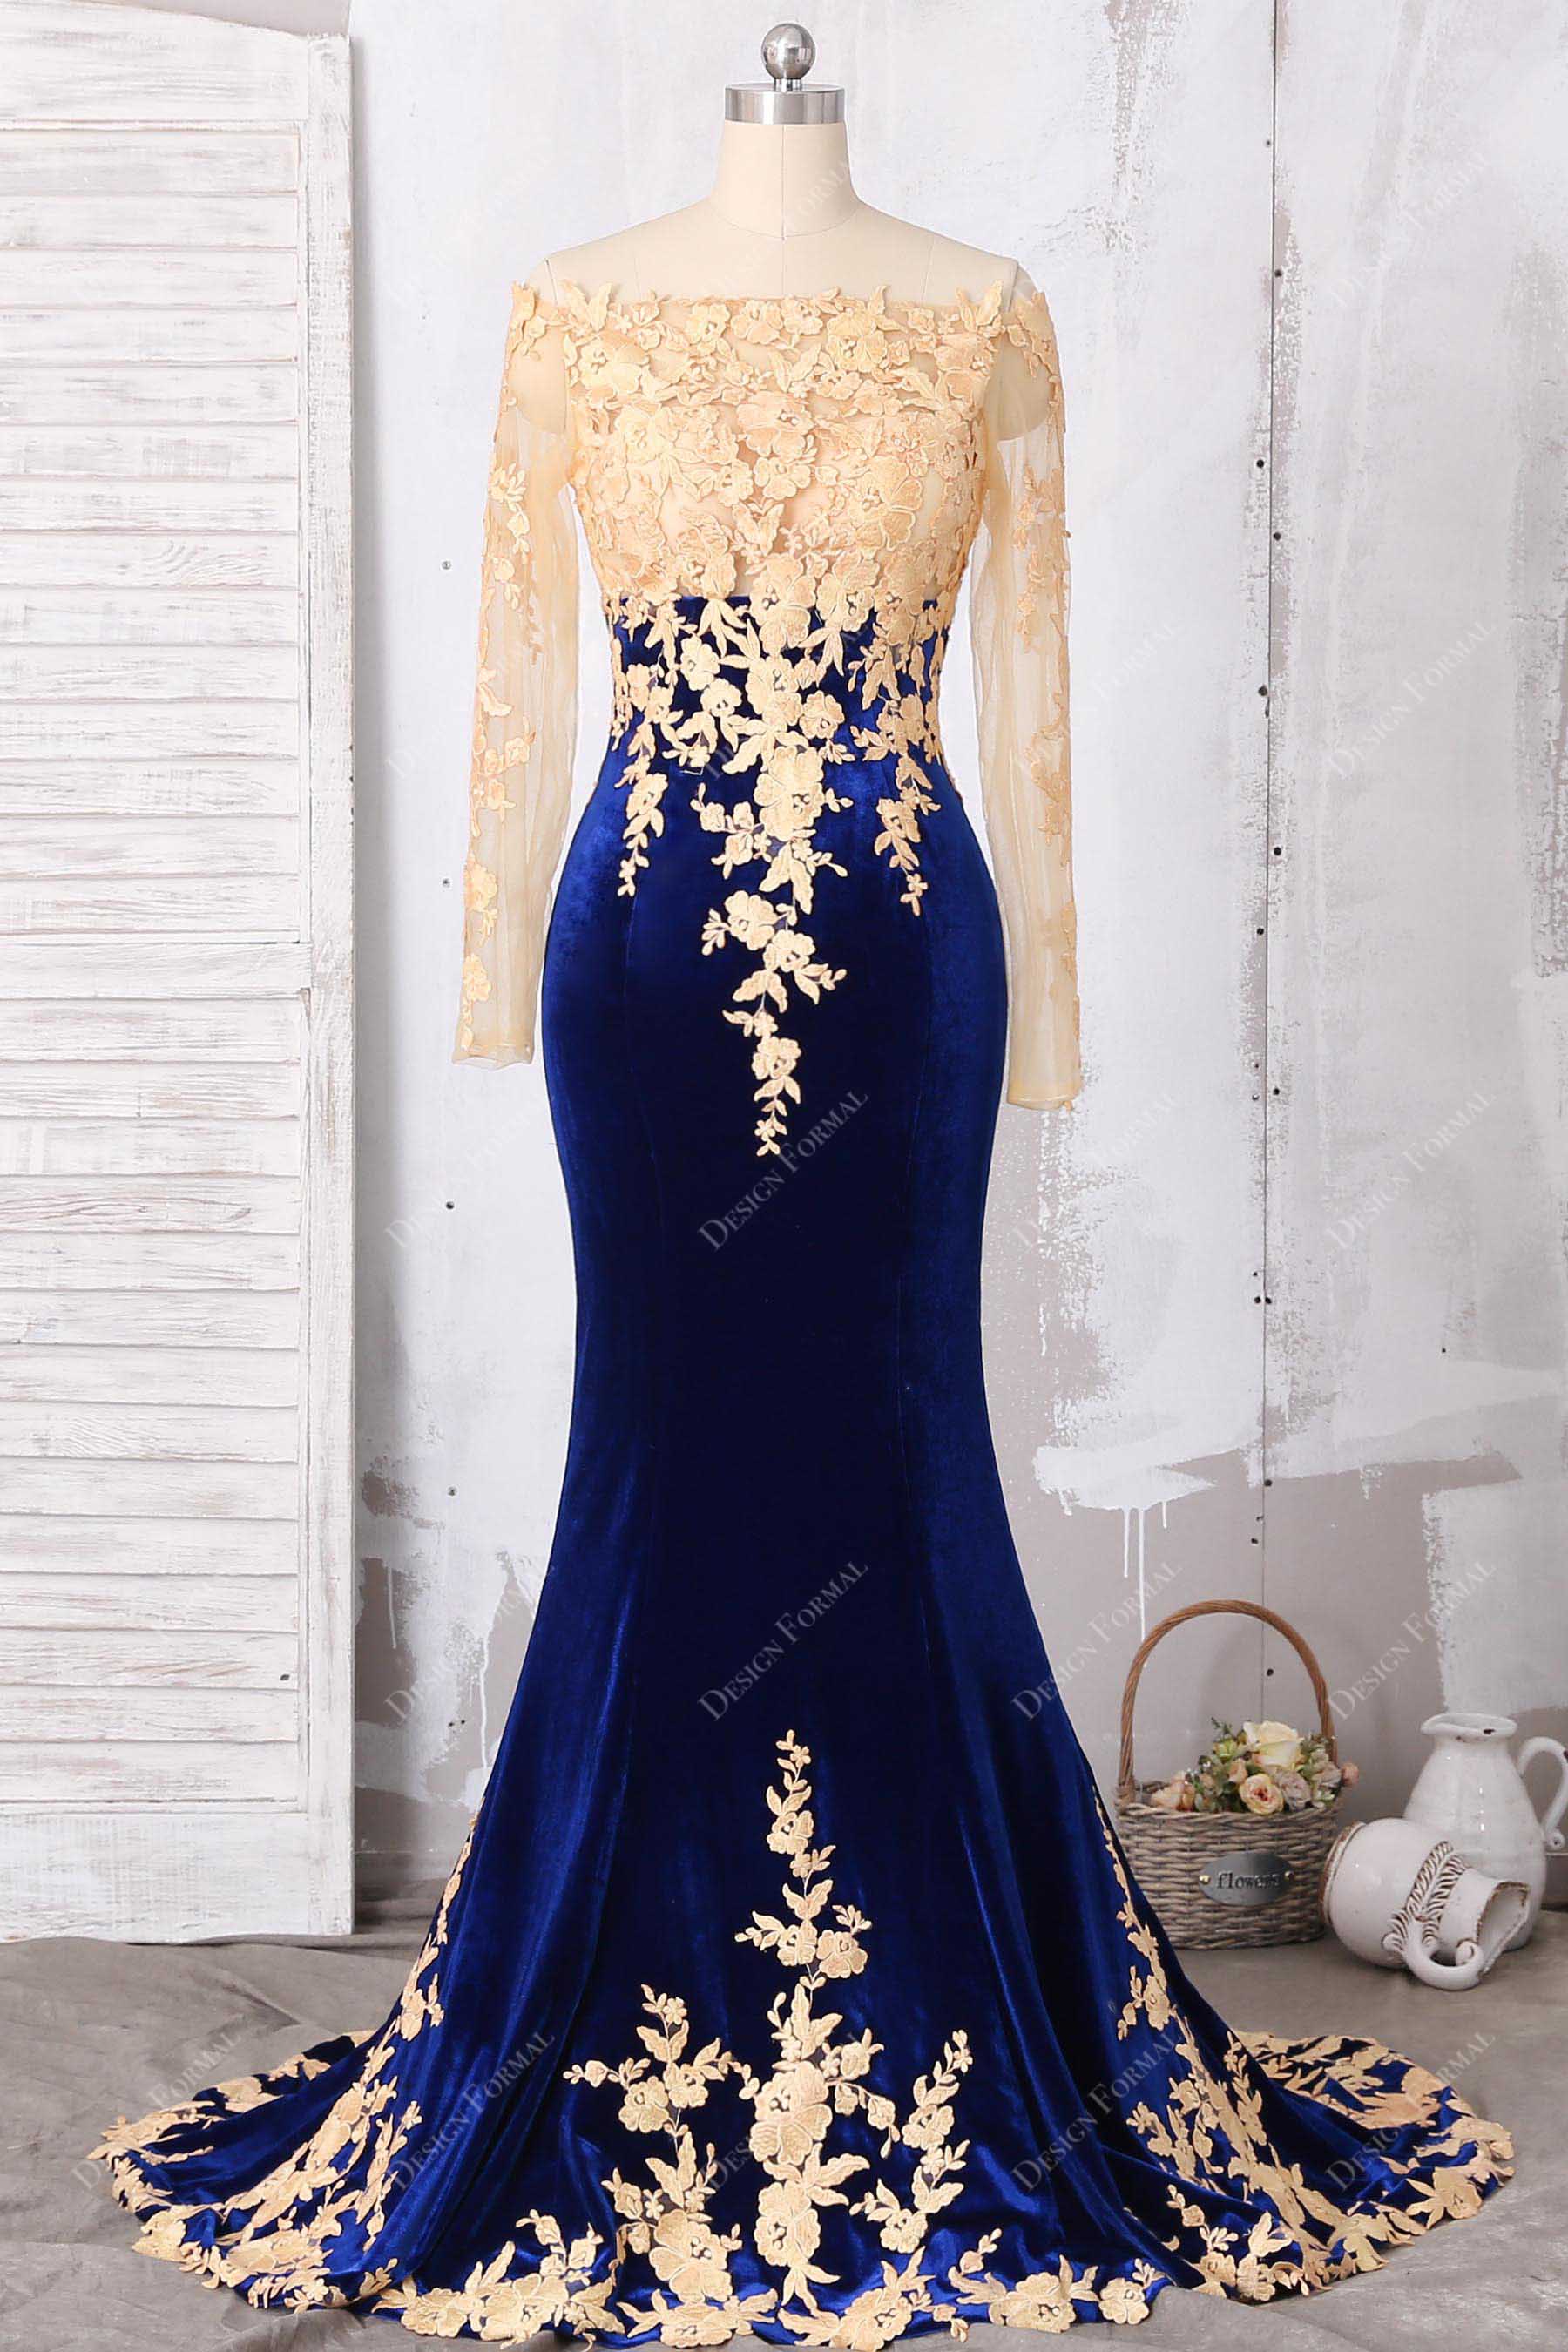 gold lace royal blue velvet dress